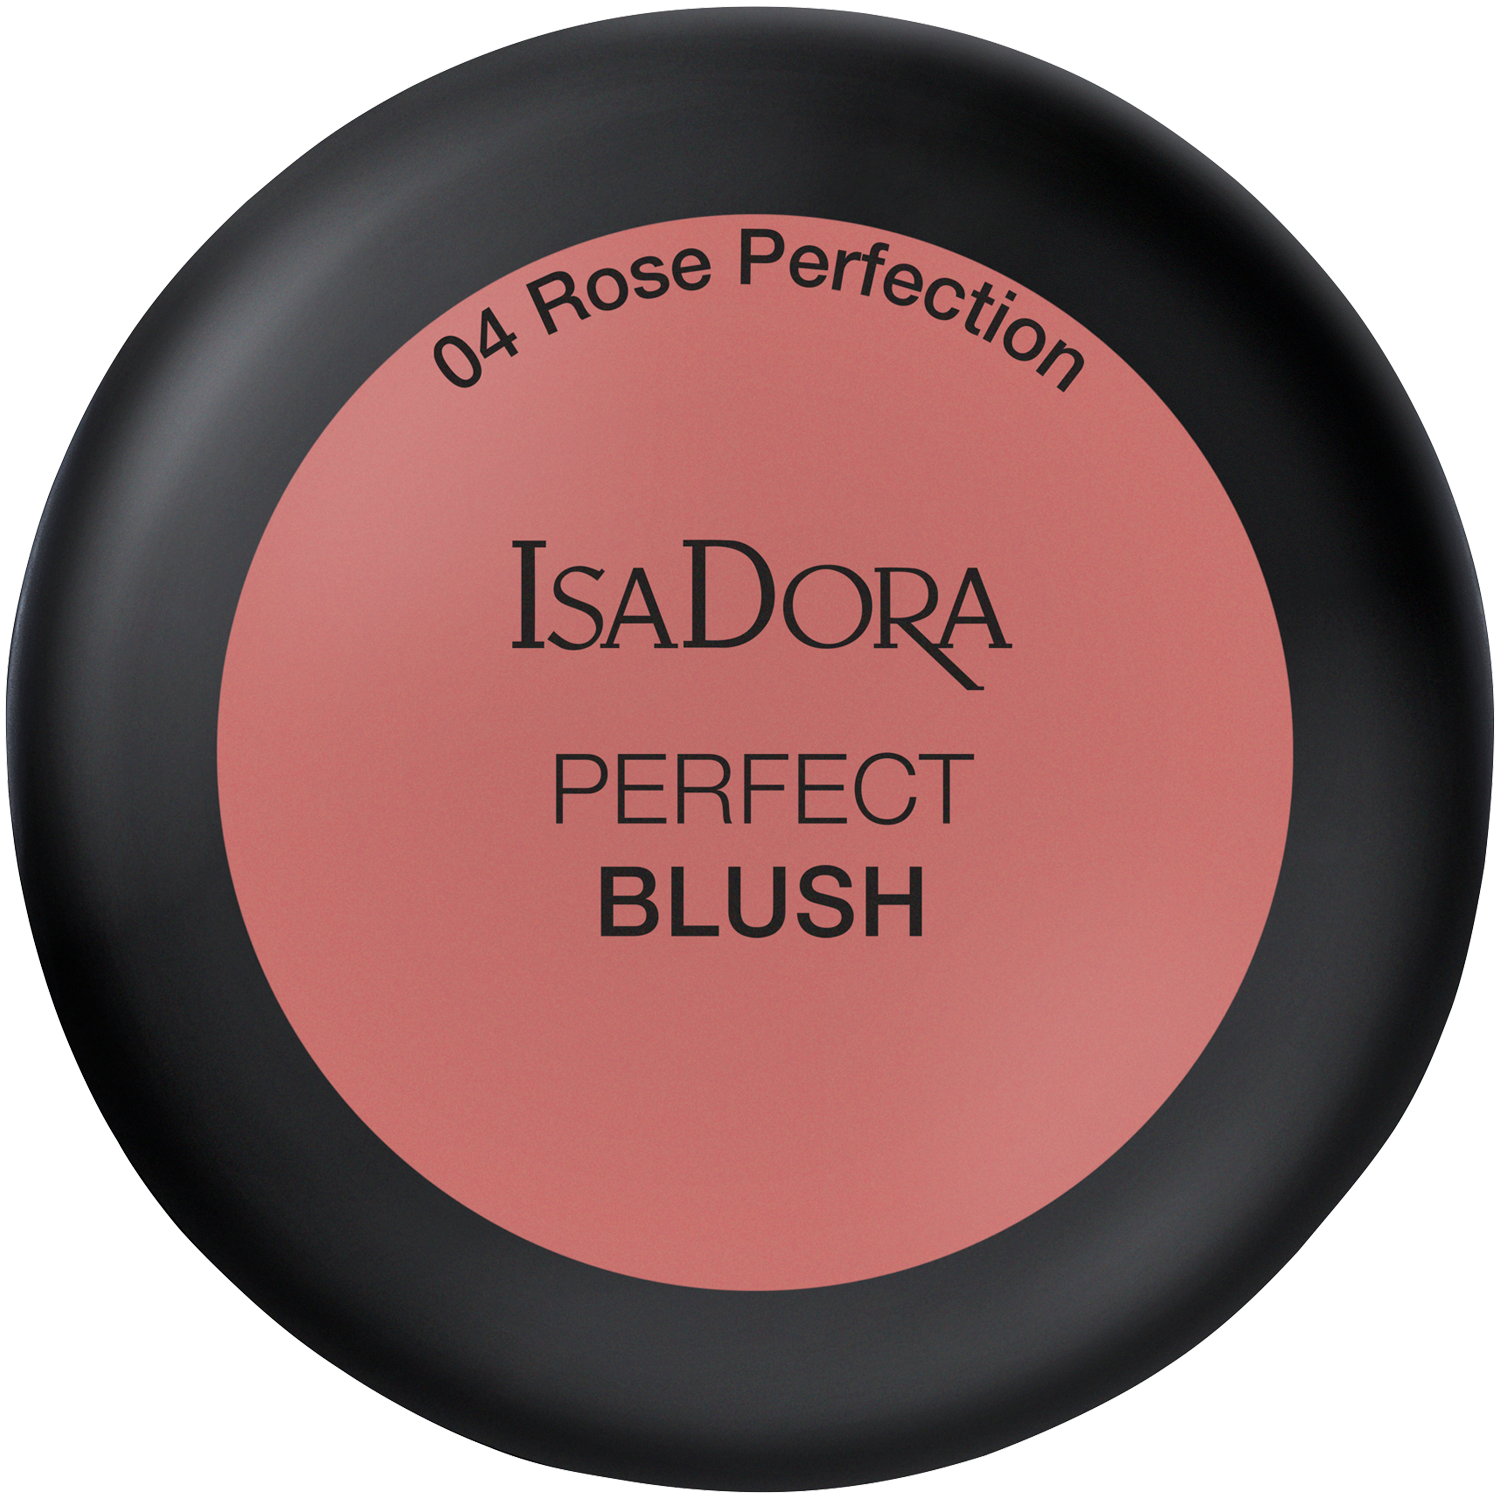 цена Румяна 04 rose perfection Isadora Perfect Blush, 4,5 гр